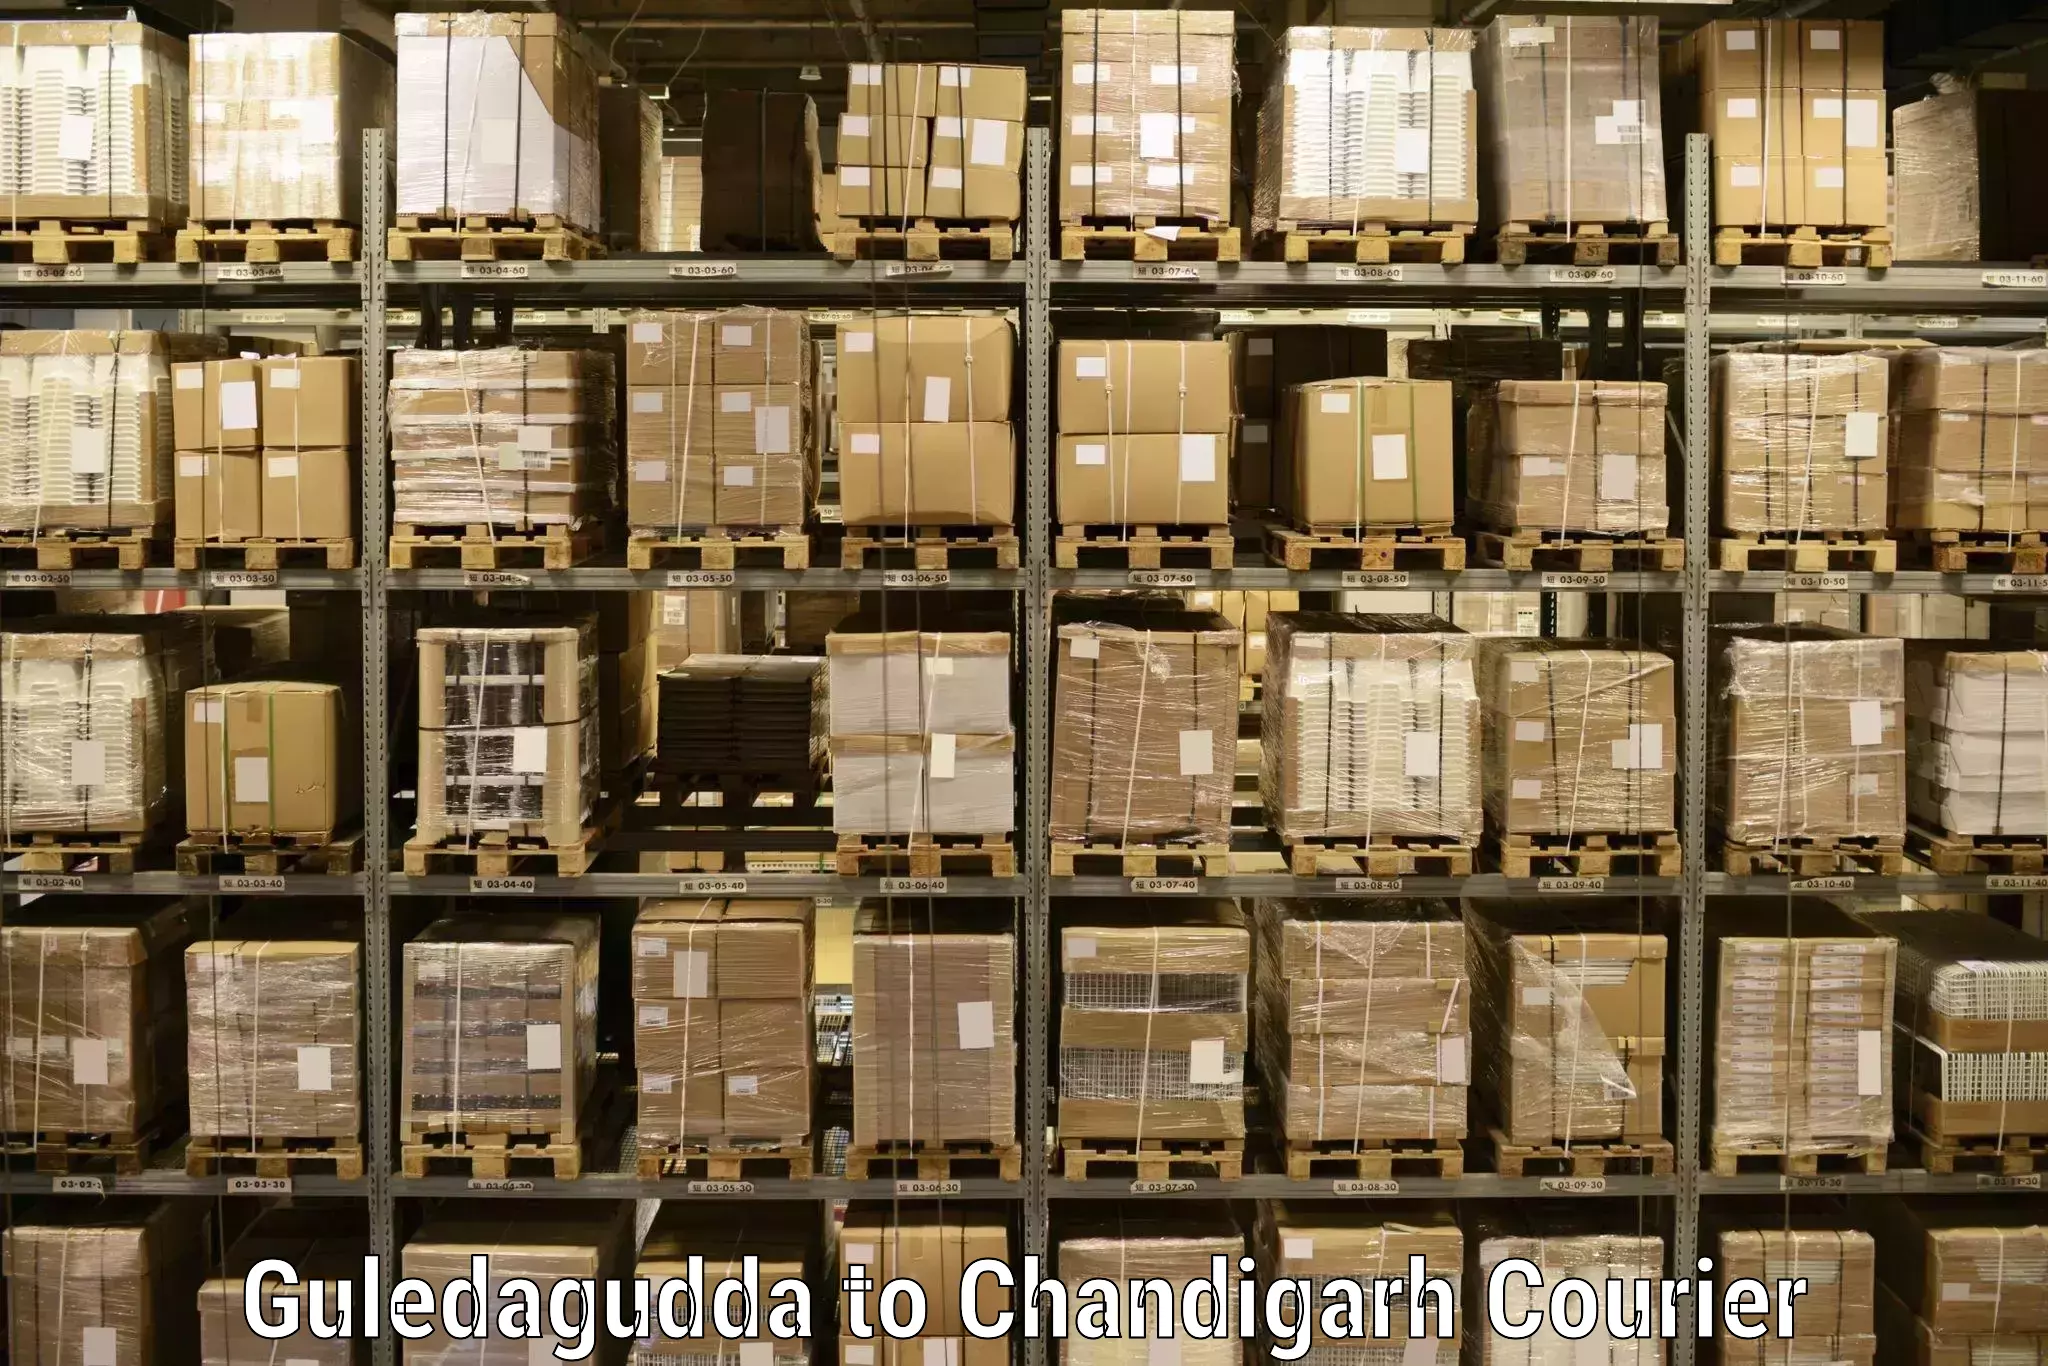 Global logistics network Guledagudda to Kharar